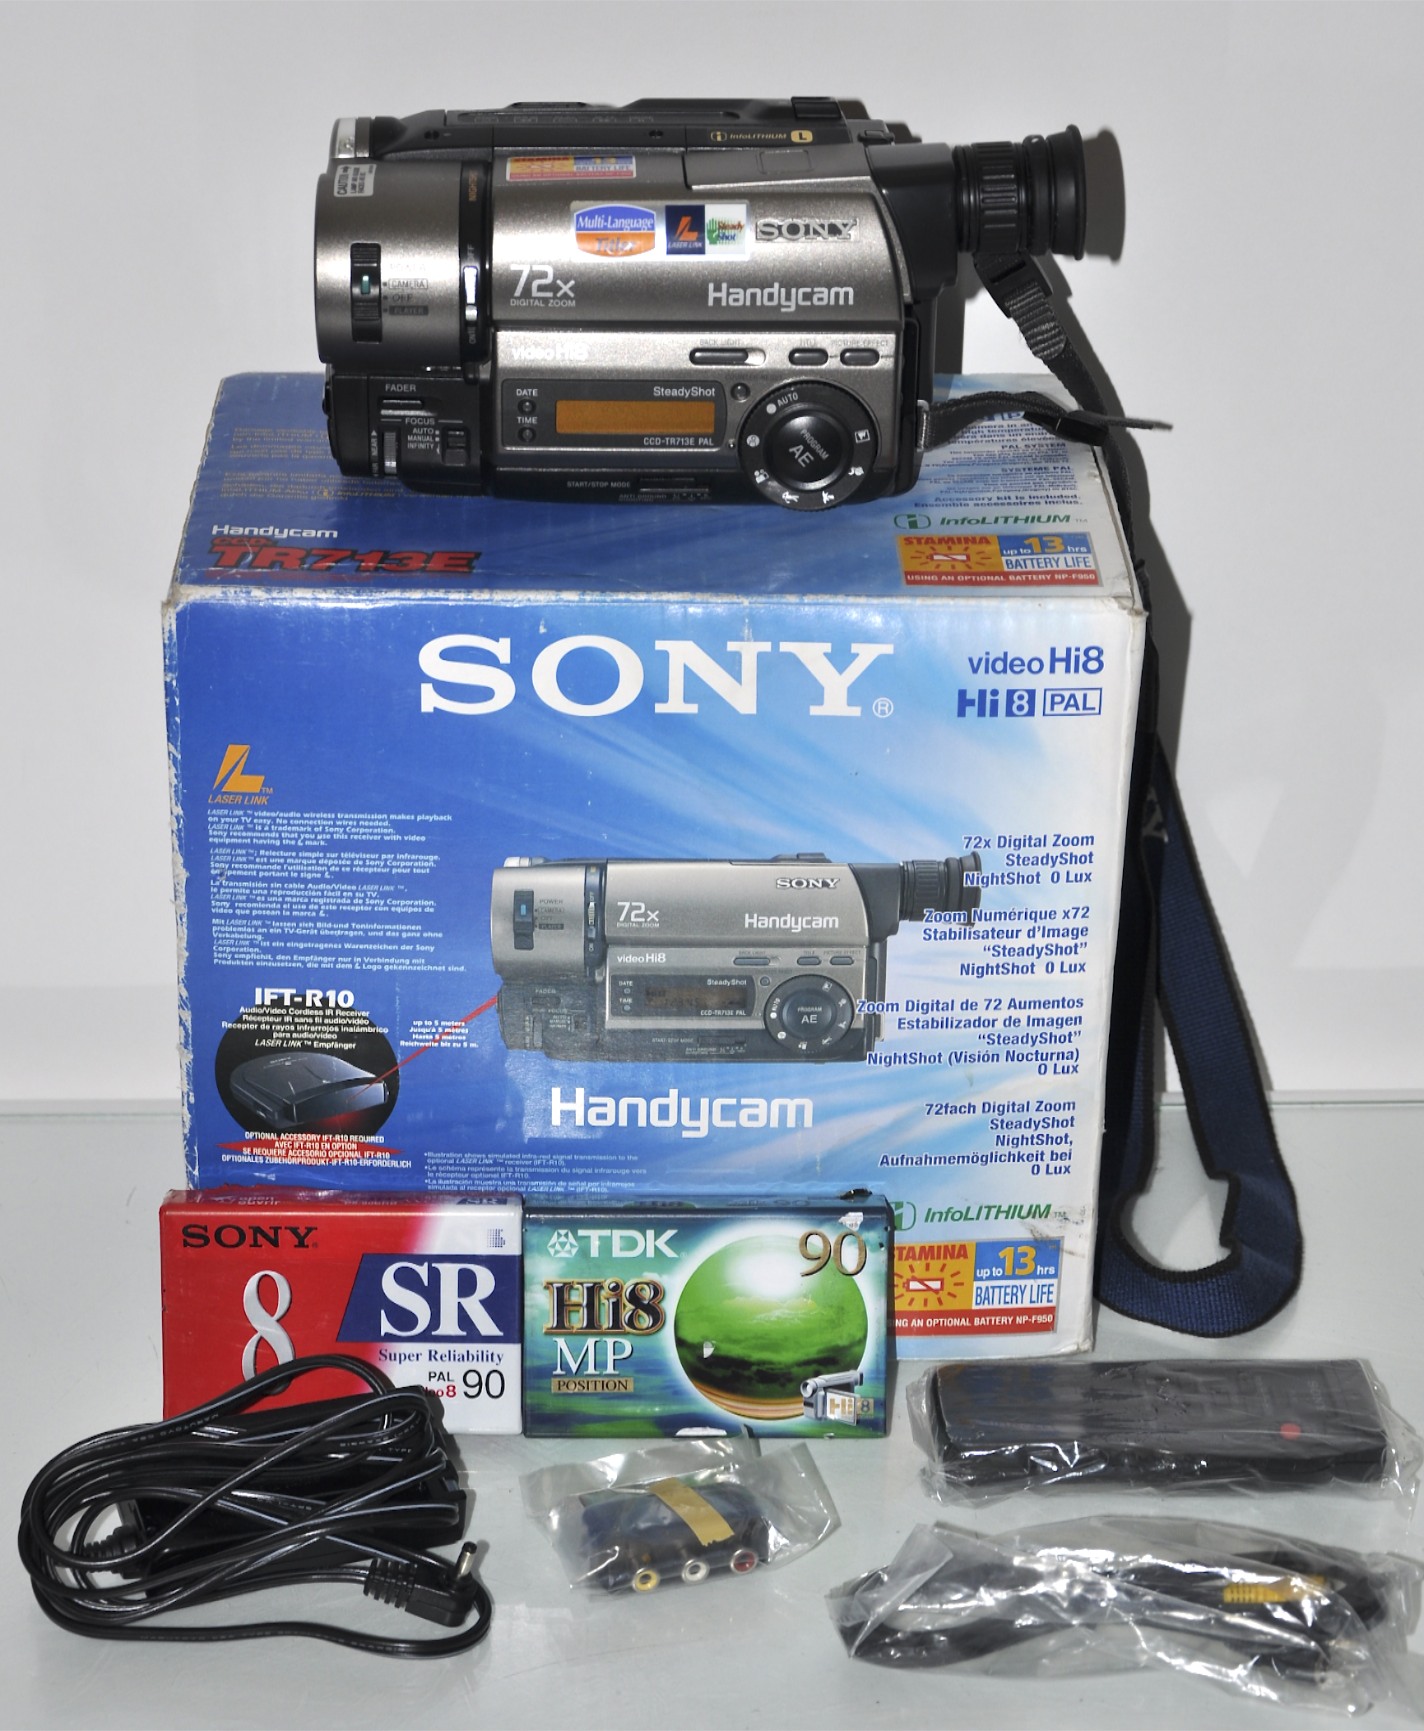 A Sony Handycam,